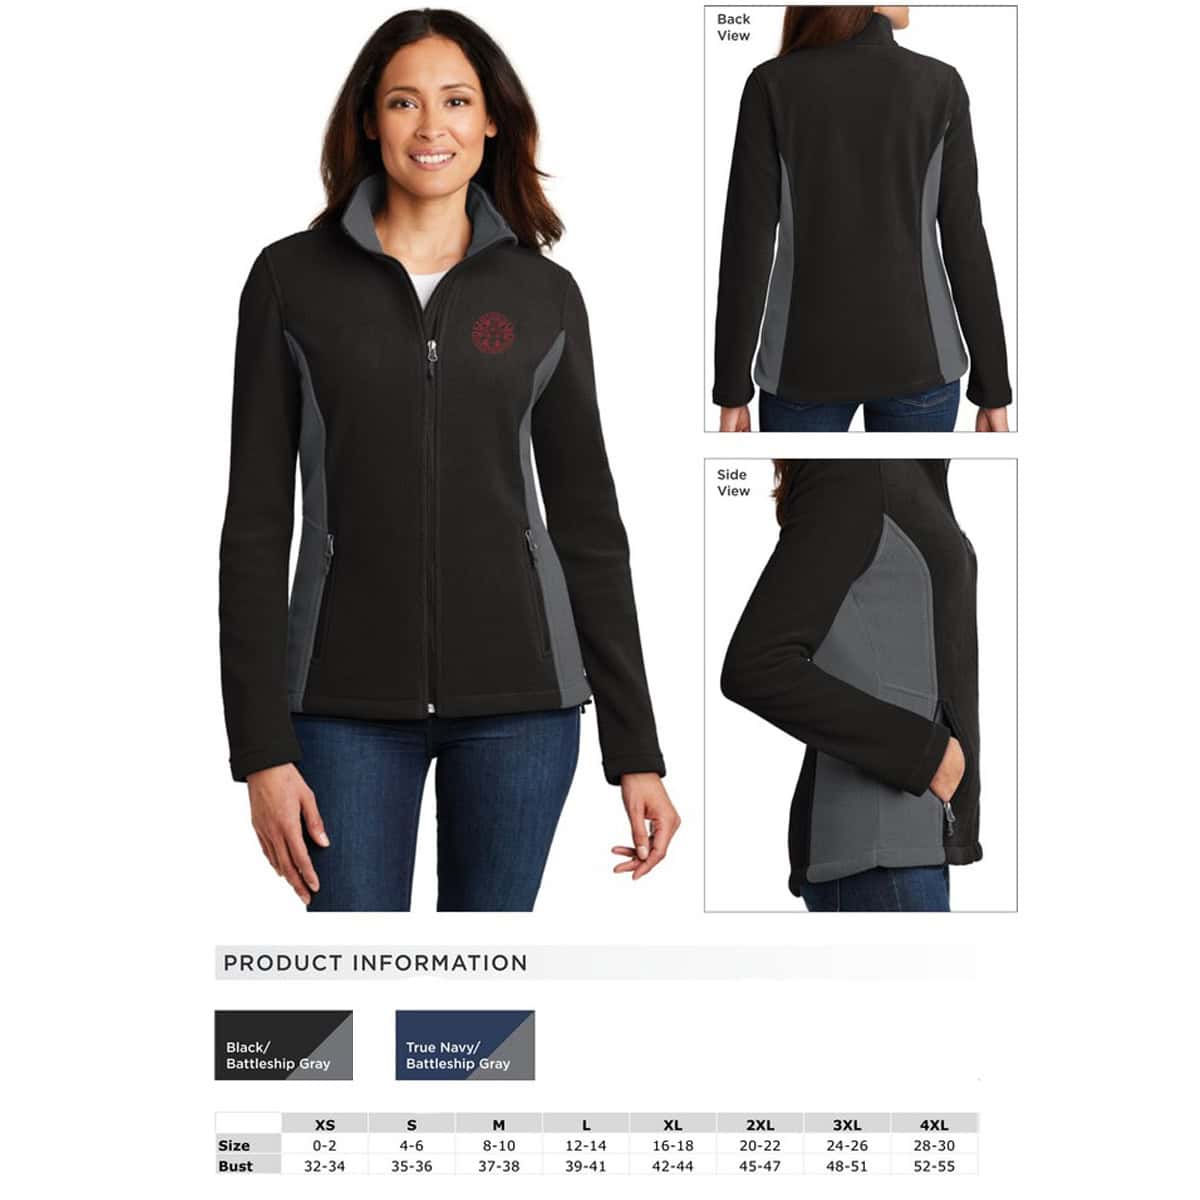 https://vianneyvocations.com/wp-content/uploads/2018/03/GI249-PA-Ladies-Colorblock-Value-Fleece-Jacket-2.jpg